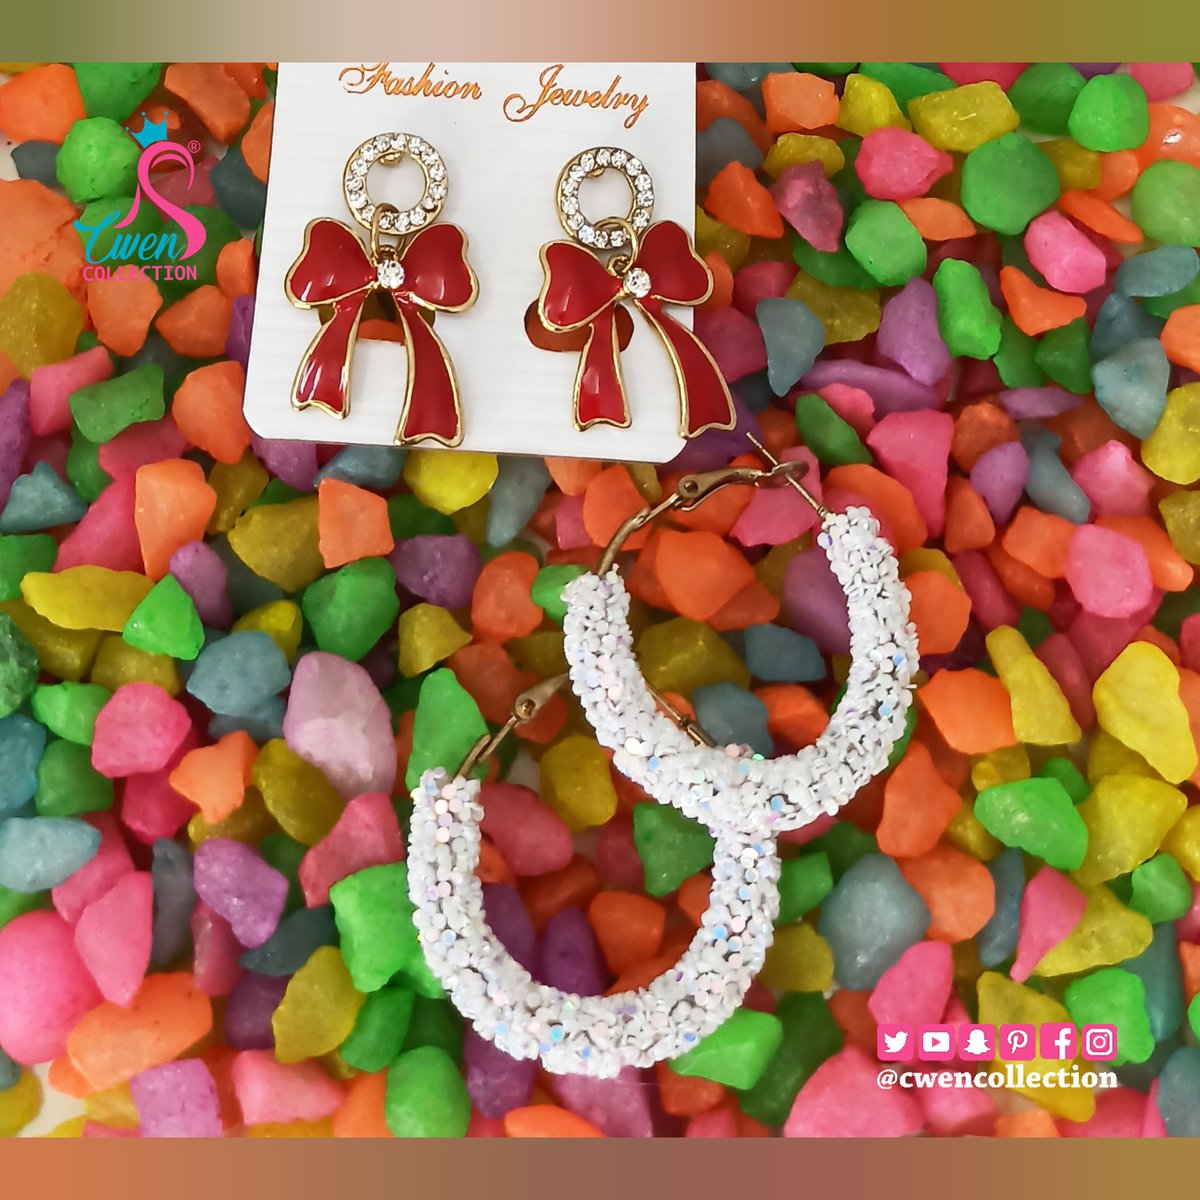 amazon.in/dp/B084LKHVM8?…
Click Above Link 2 Order
#handmadejewelry #etsy #bridaltips #bridaljewellery #fashionjewelry #shopping #weddingjewelry #jewelryaddict #indianwedding   #jewelry #earring #diytips #gifts #bride #handcrafted #mumbai #delhi #tips #fashiontips #craft #smallbiz